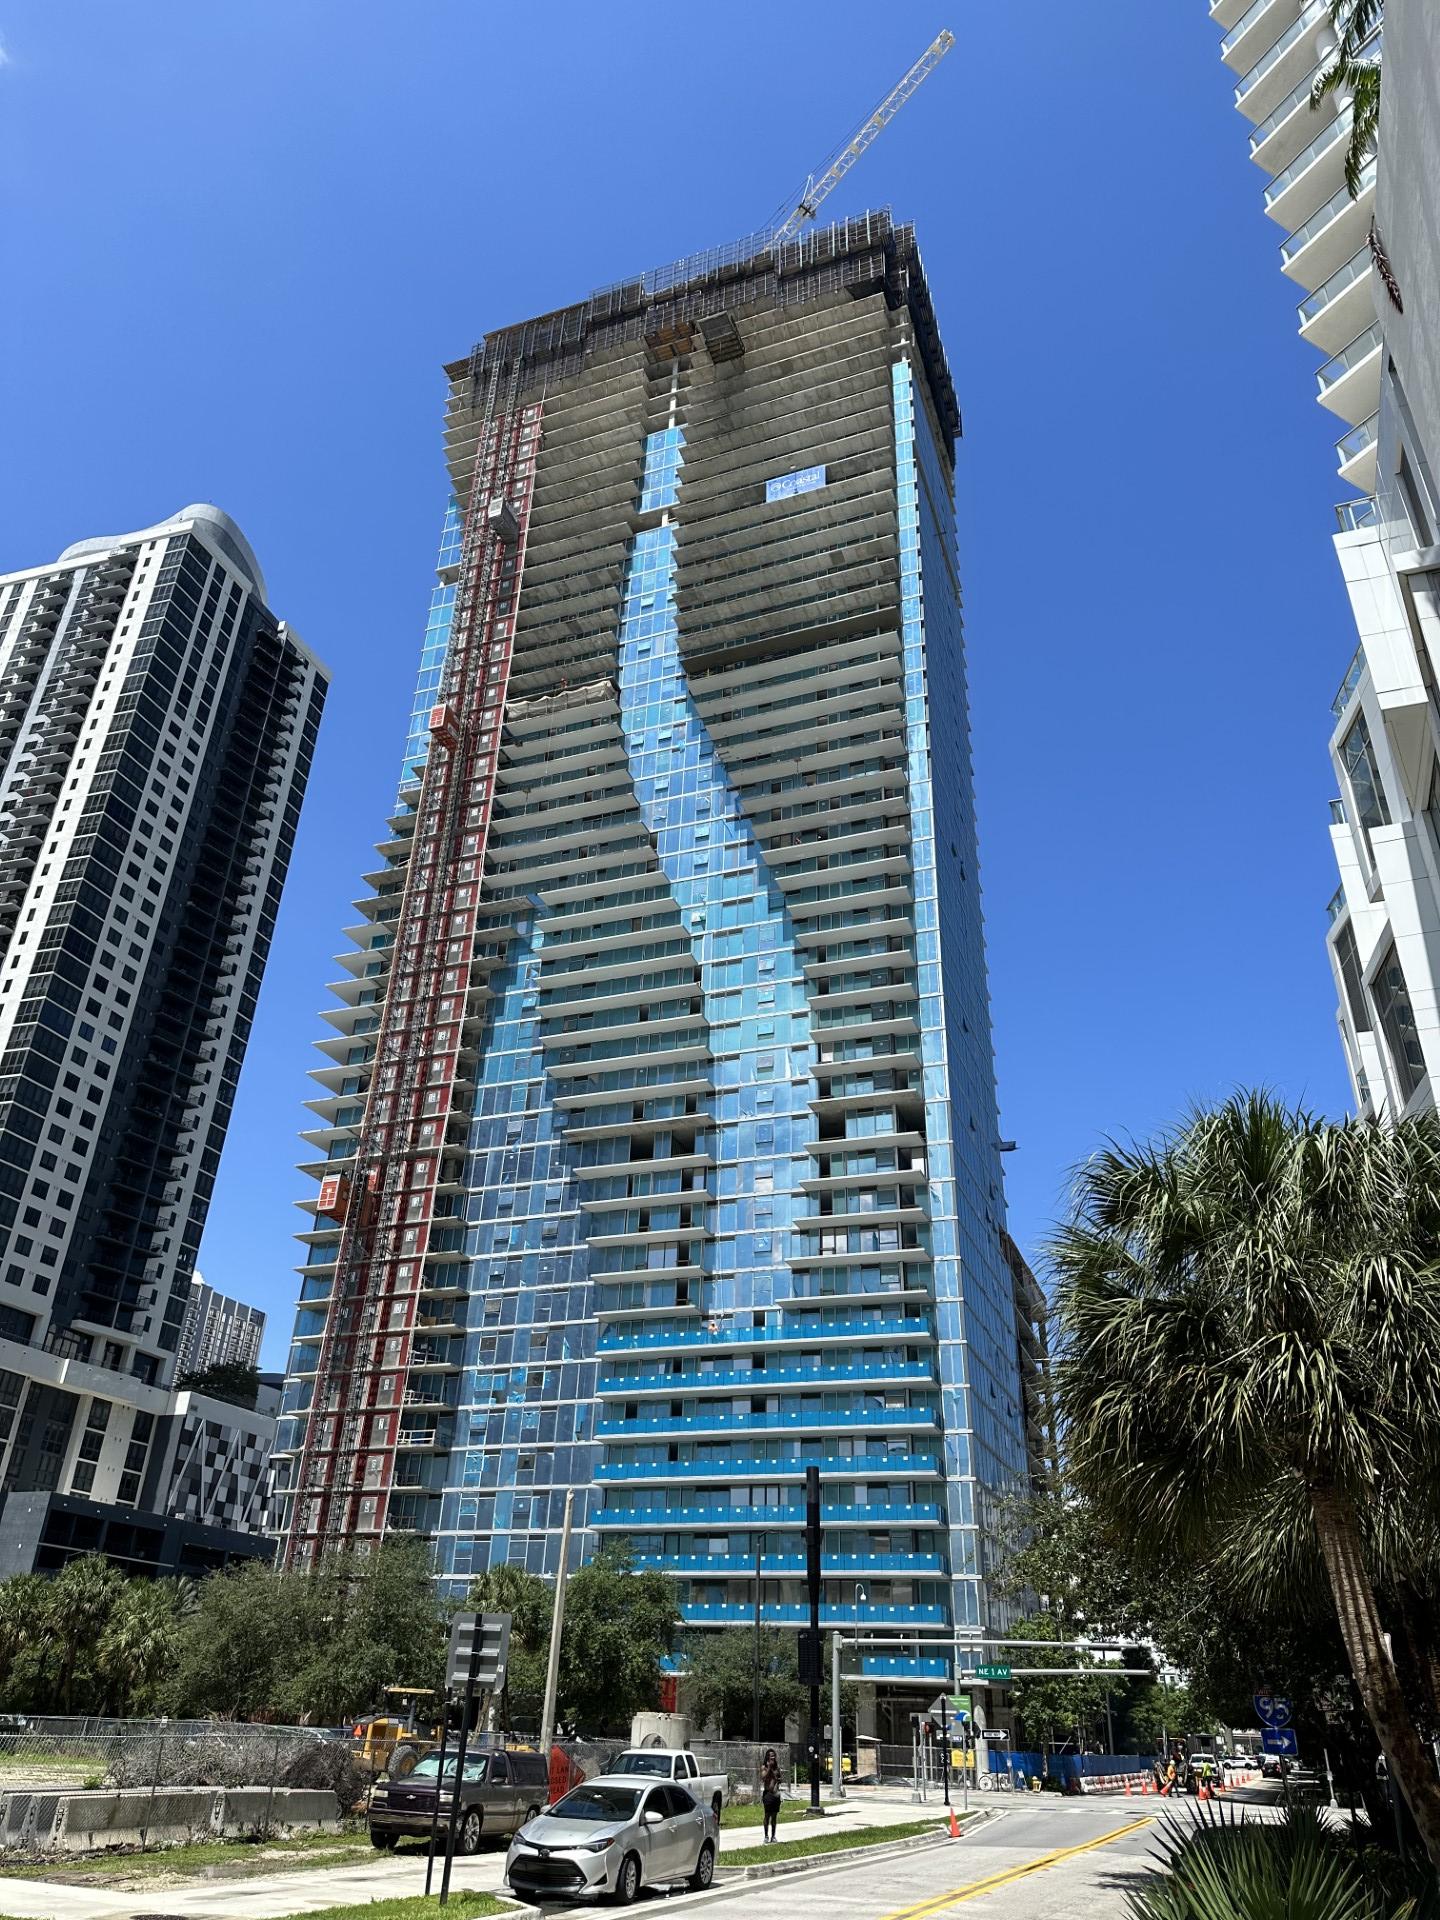 Nichols designed Miami World Tower (photo: Phillip Pessar)